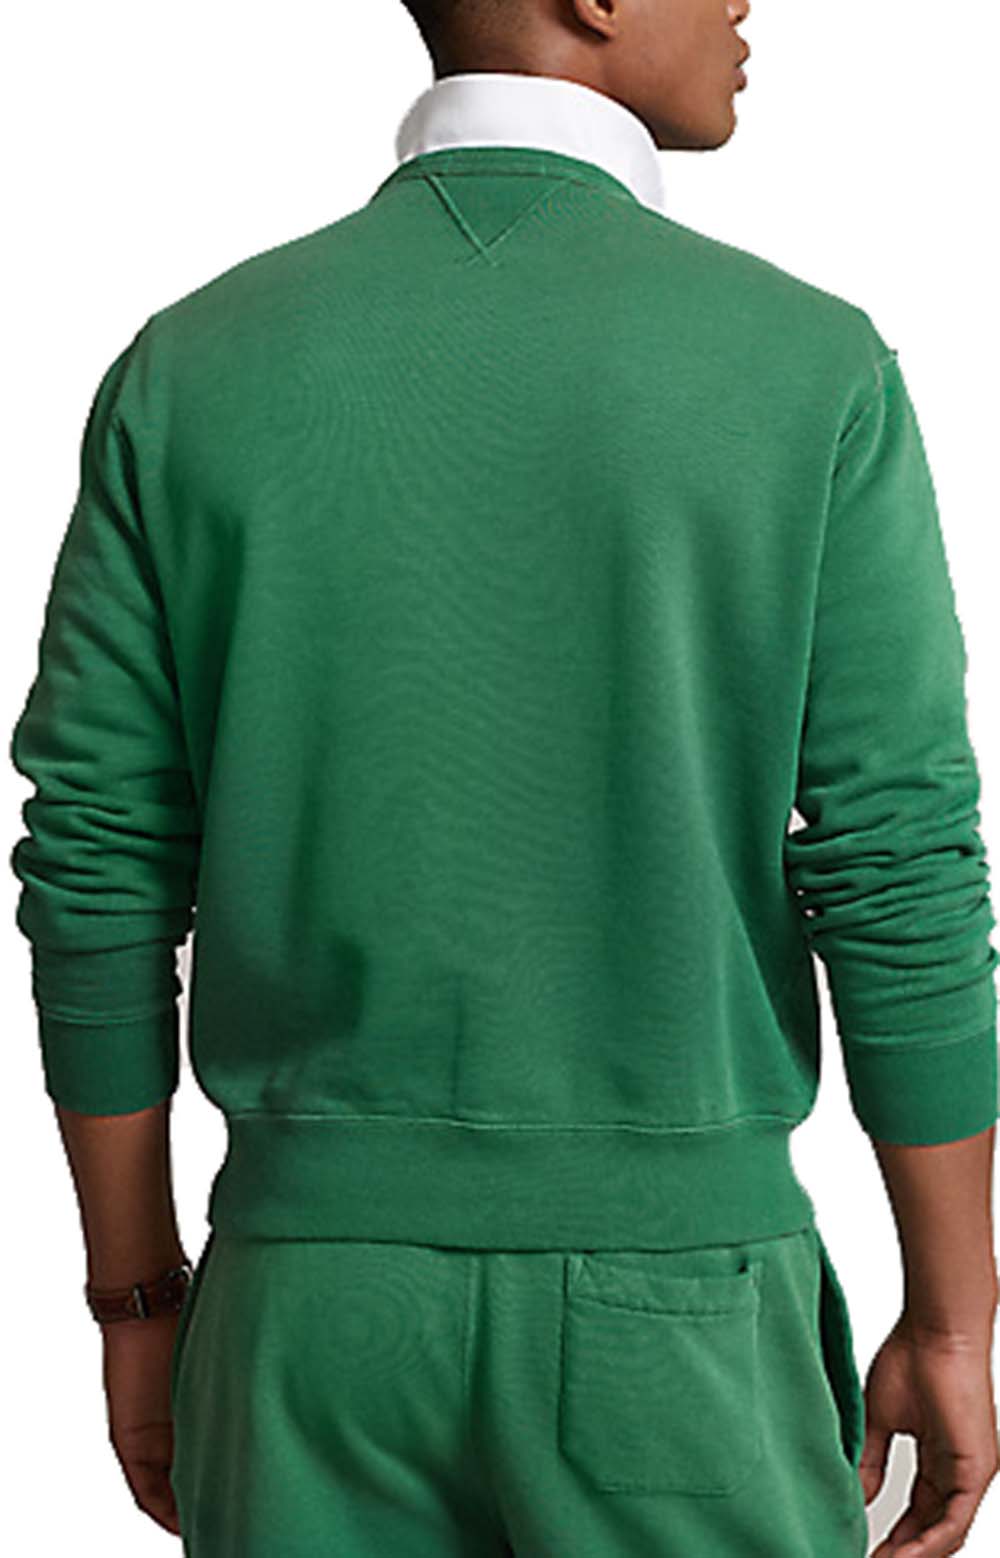 Logo Fleece Sweatshirt - Verano Green